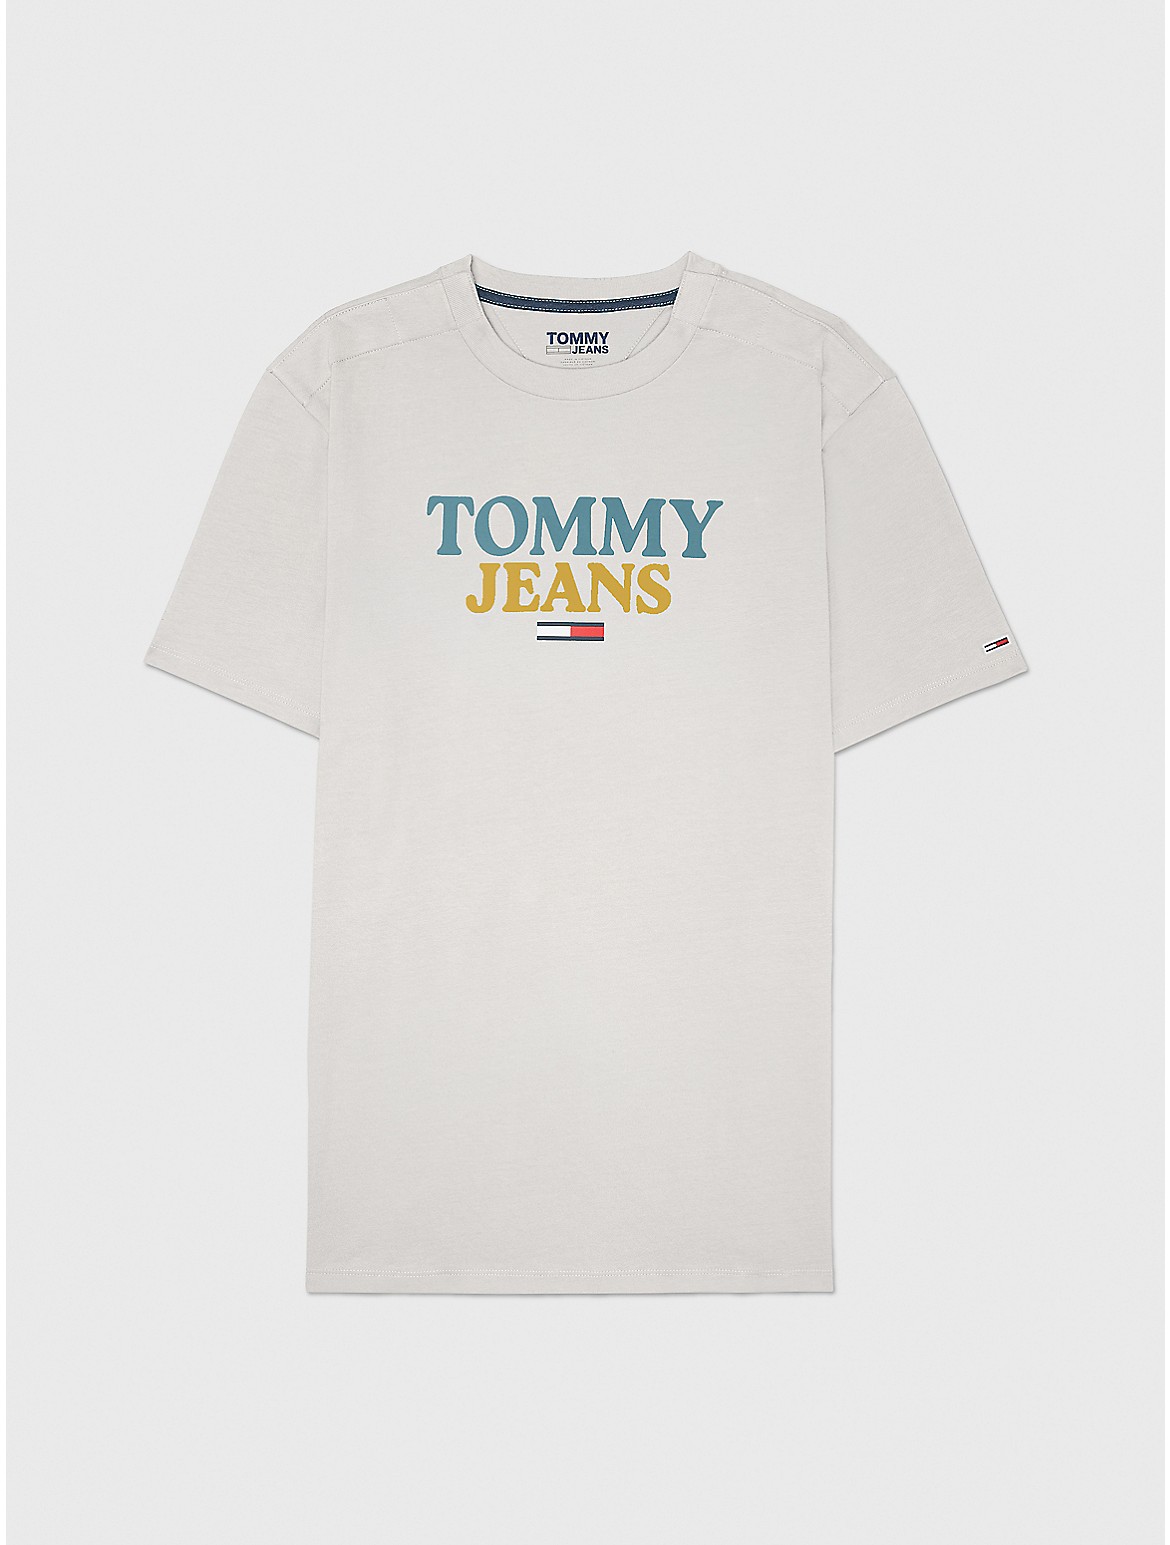 Tommy Hilfiger Men's Tommy Jeans T-Shirt